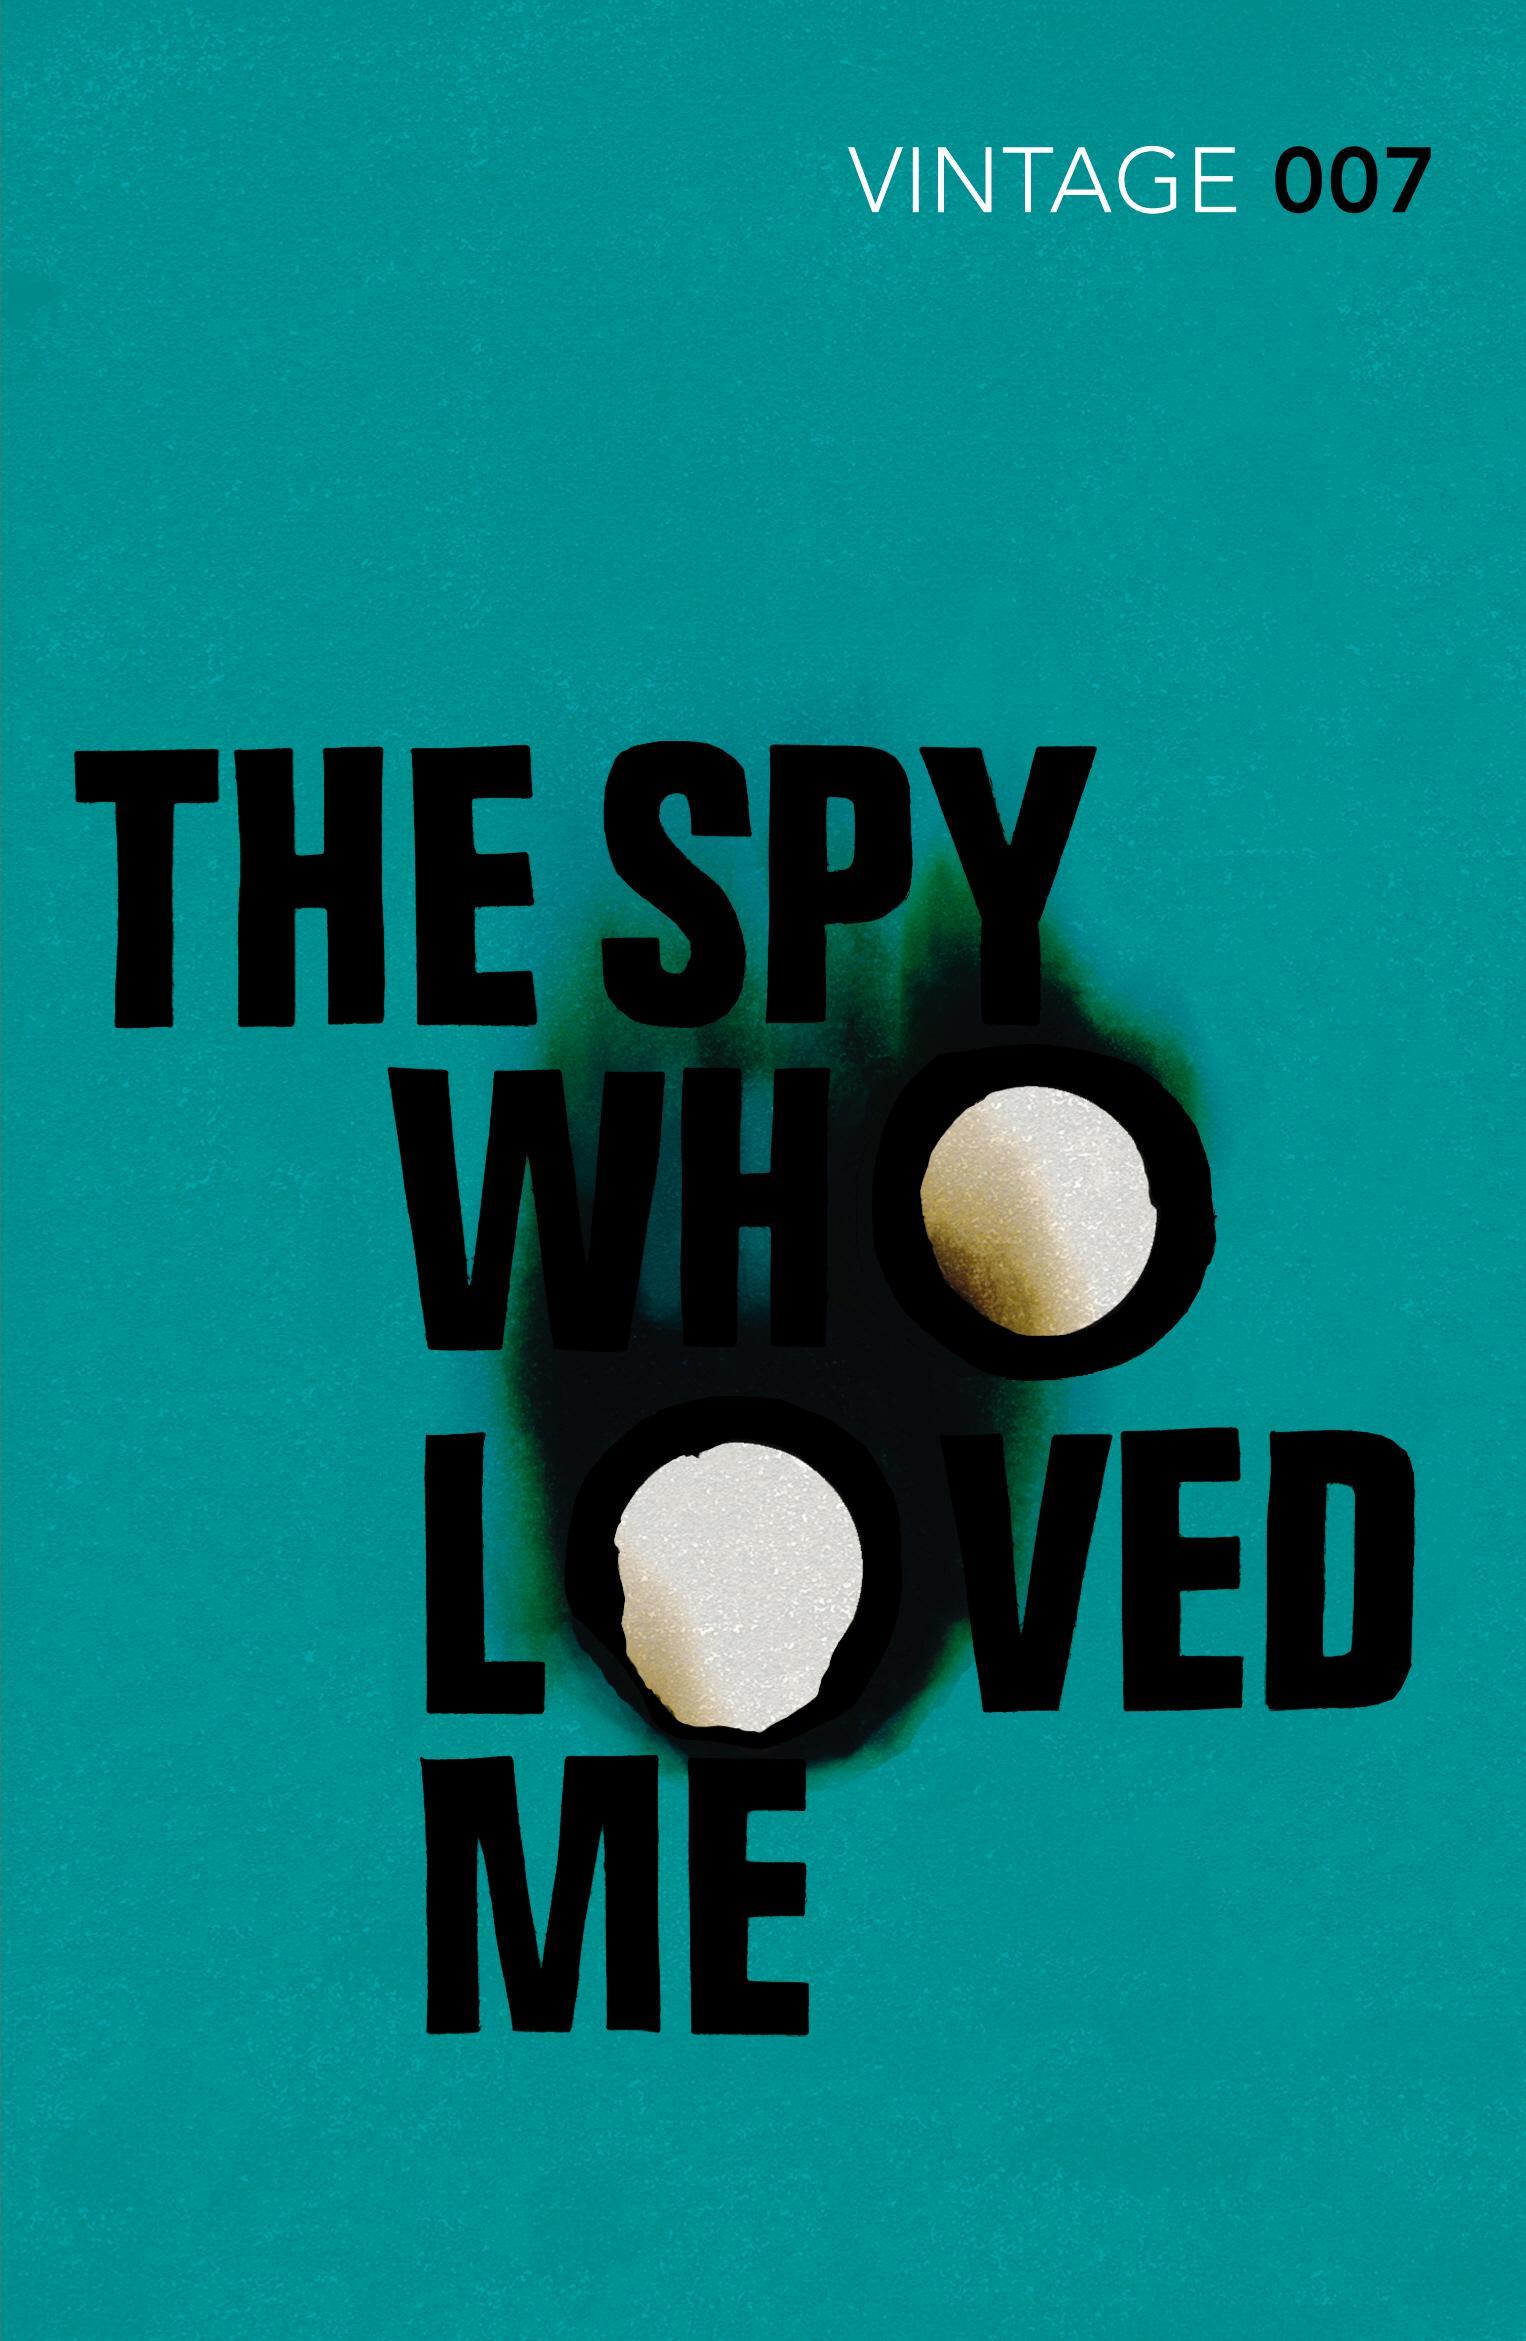 Spy Who Loved Me - Ian Fleming